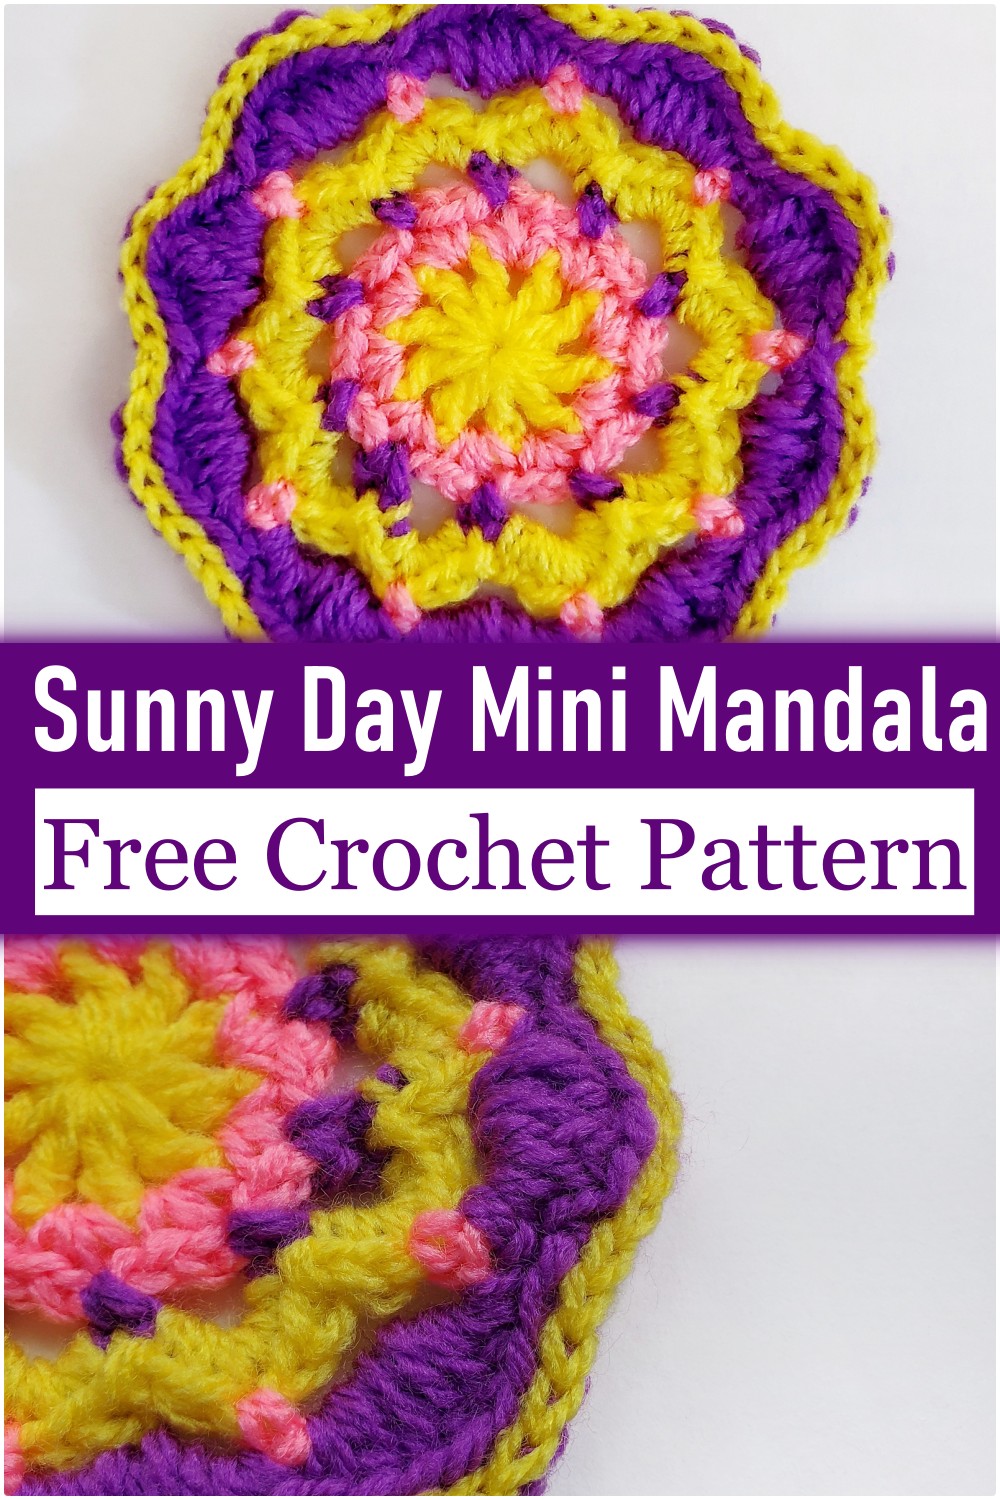 Sunny Day Mini Mandala